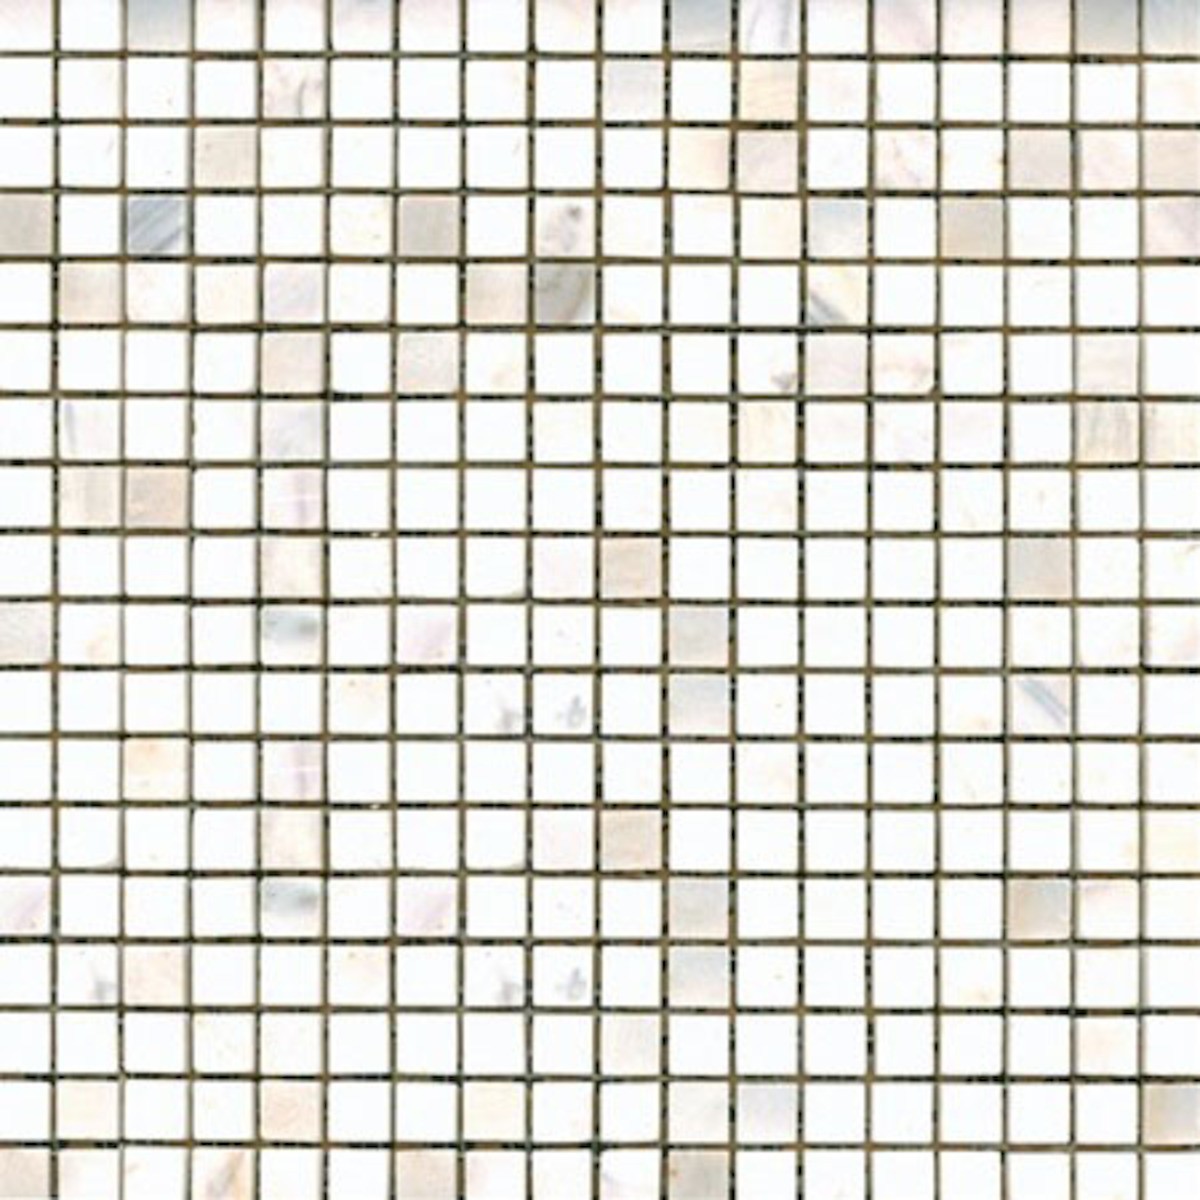 Kamenná mozaika Premium Mosaic Stone bílá 30x30 cm leštěná STMOS15WHP Premium Mosaic Stone